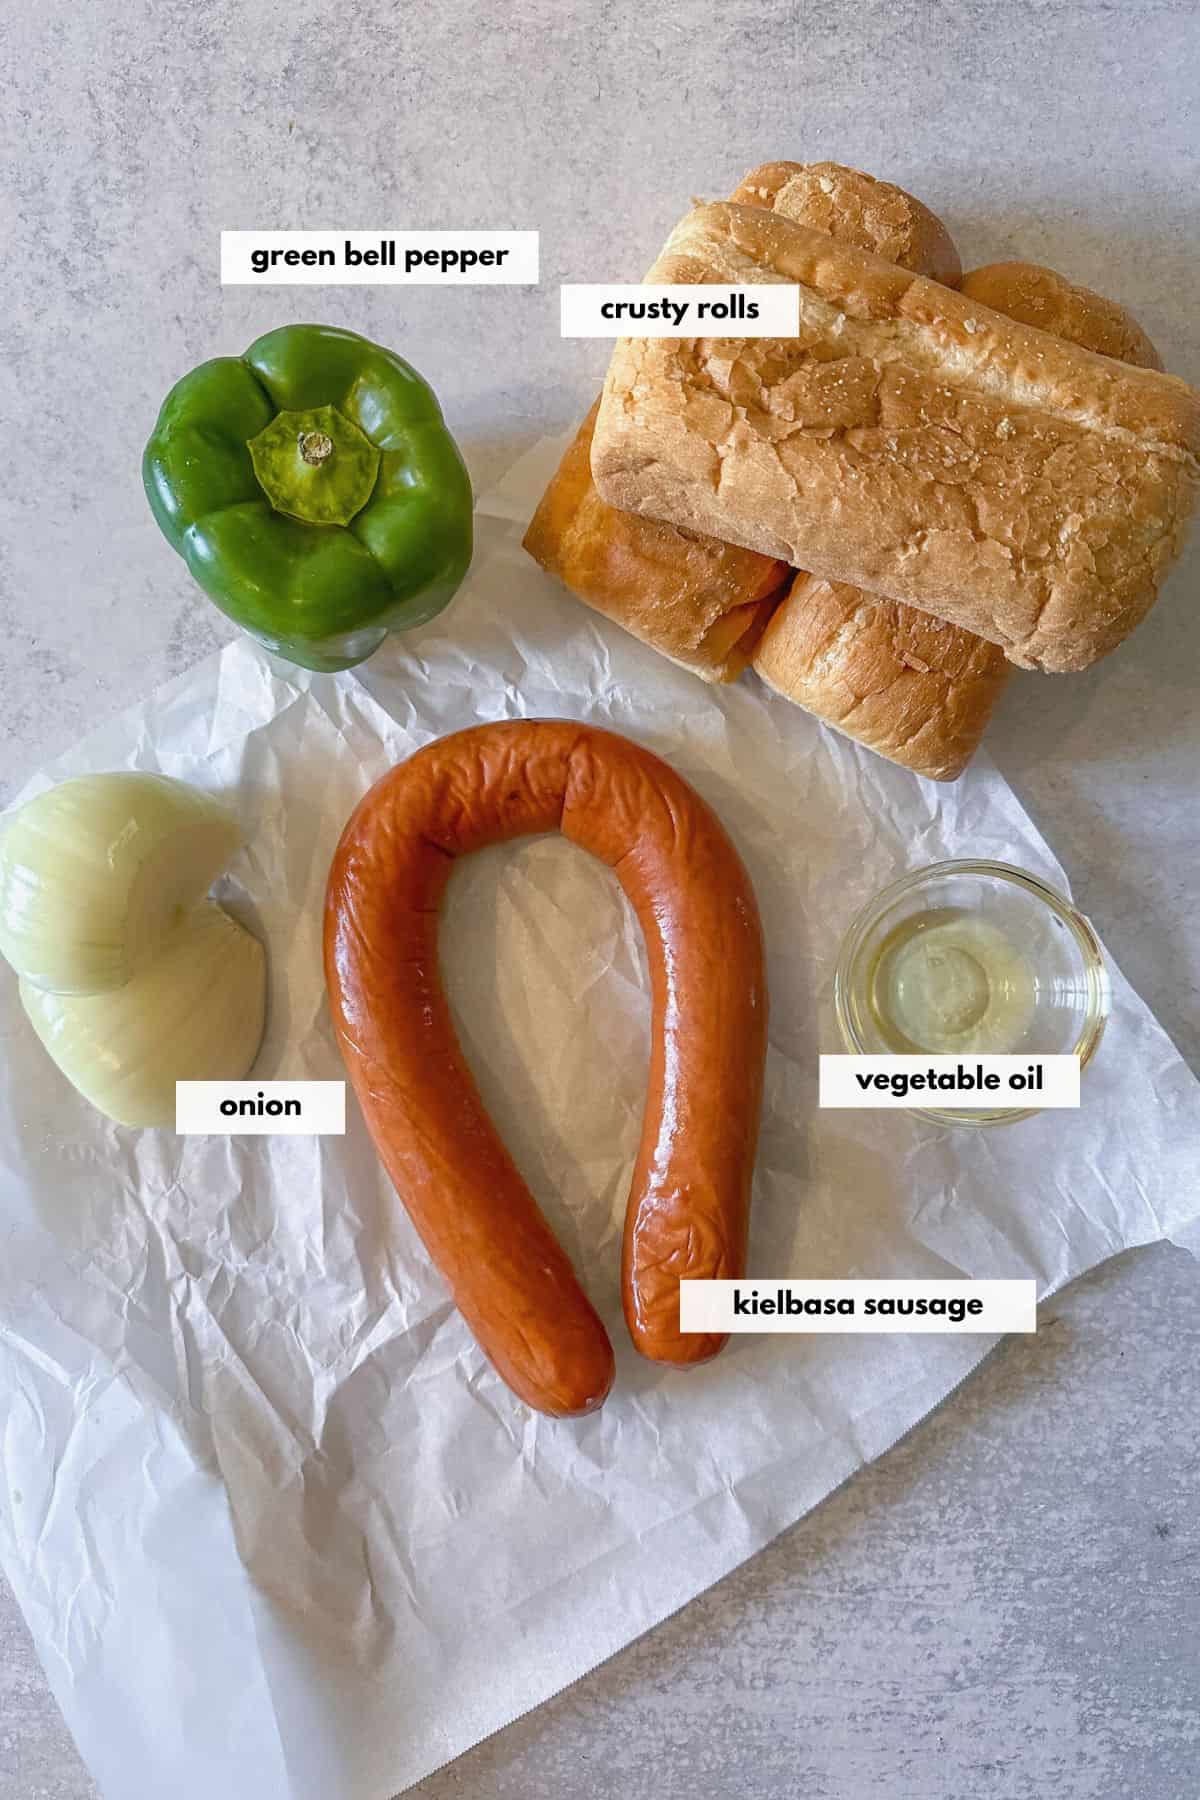 Ingredients are kielbasa sausage, onion, green pepper, olive oil and crusty Italian rolls.